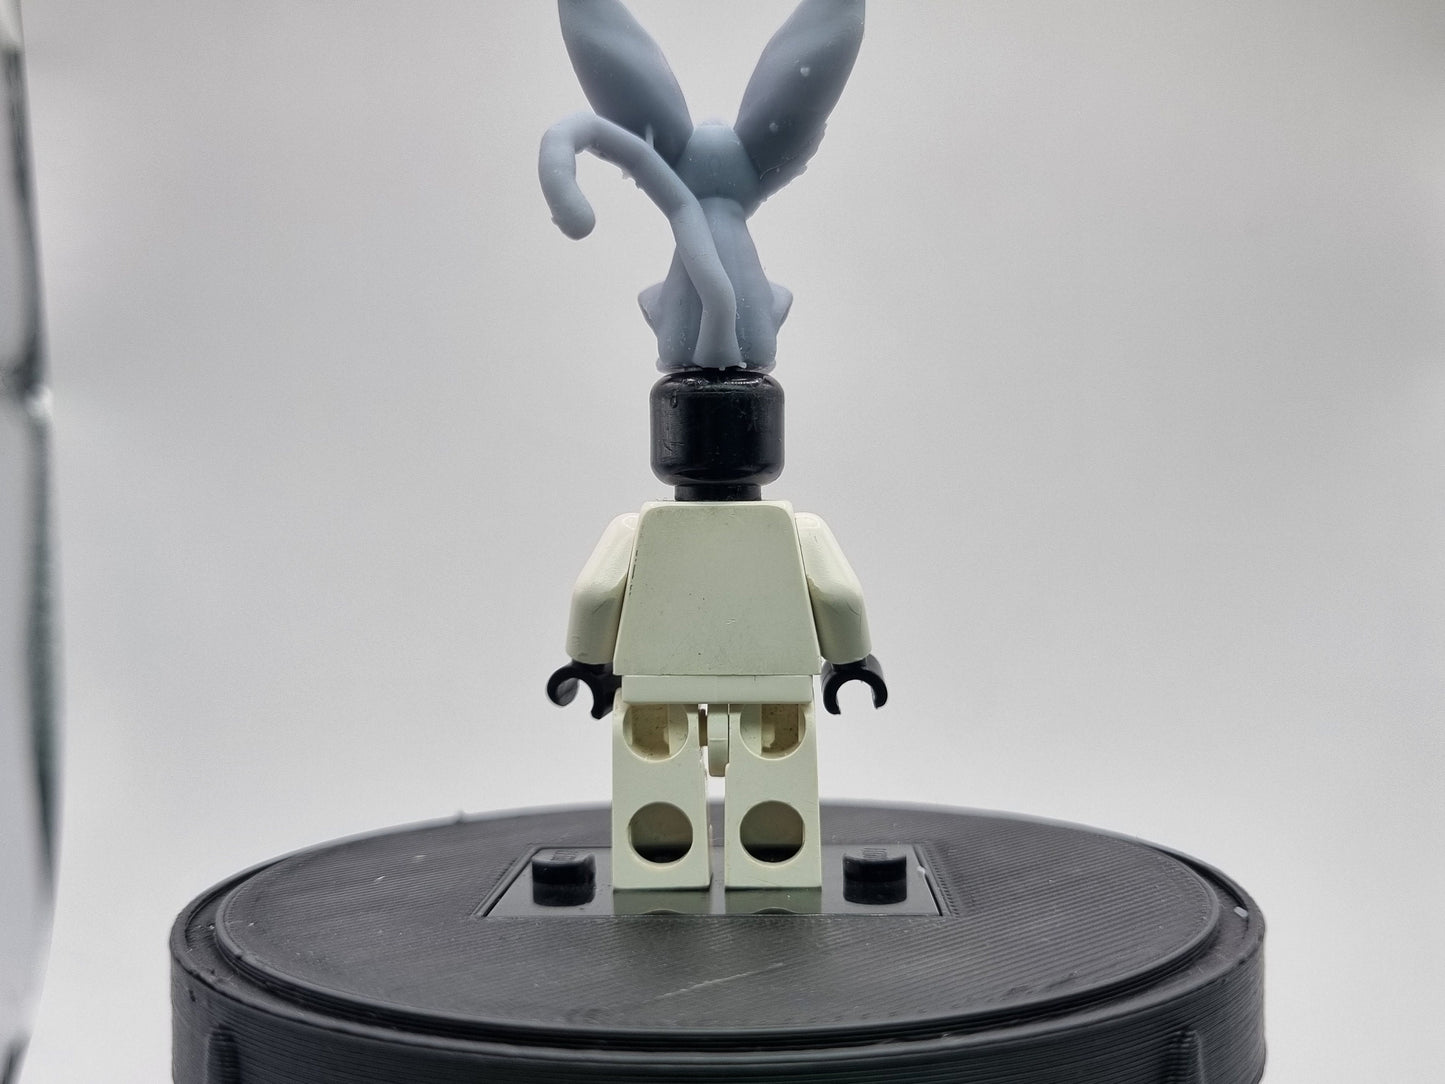 Building toy custom 3D printed monkey on head!